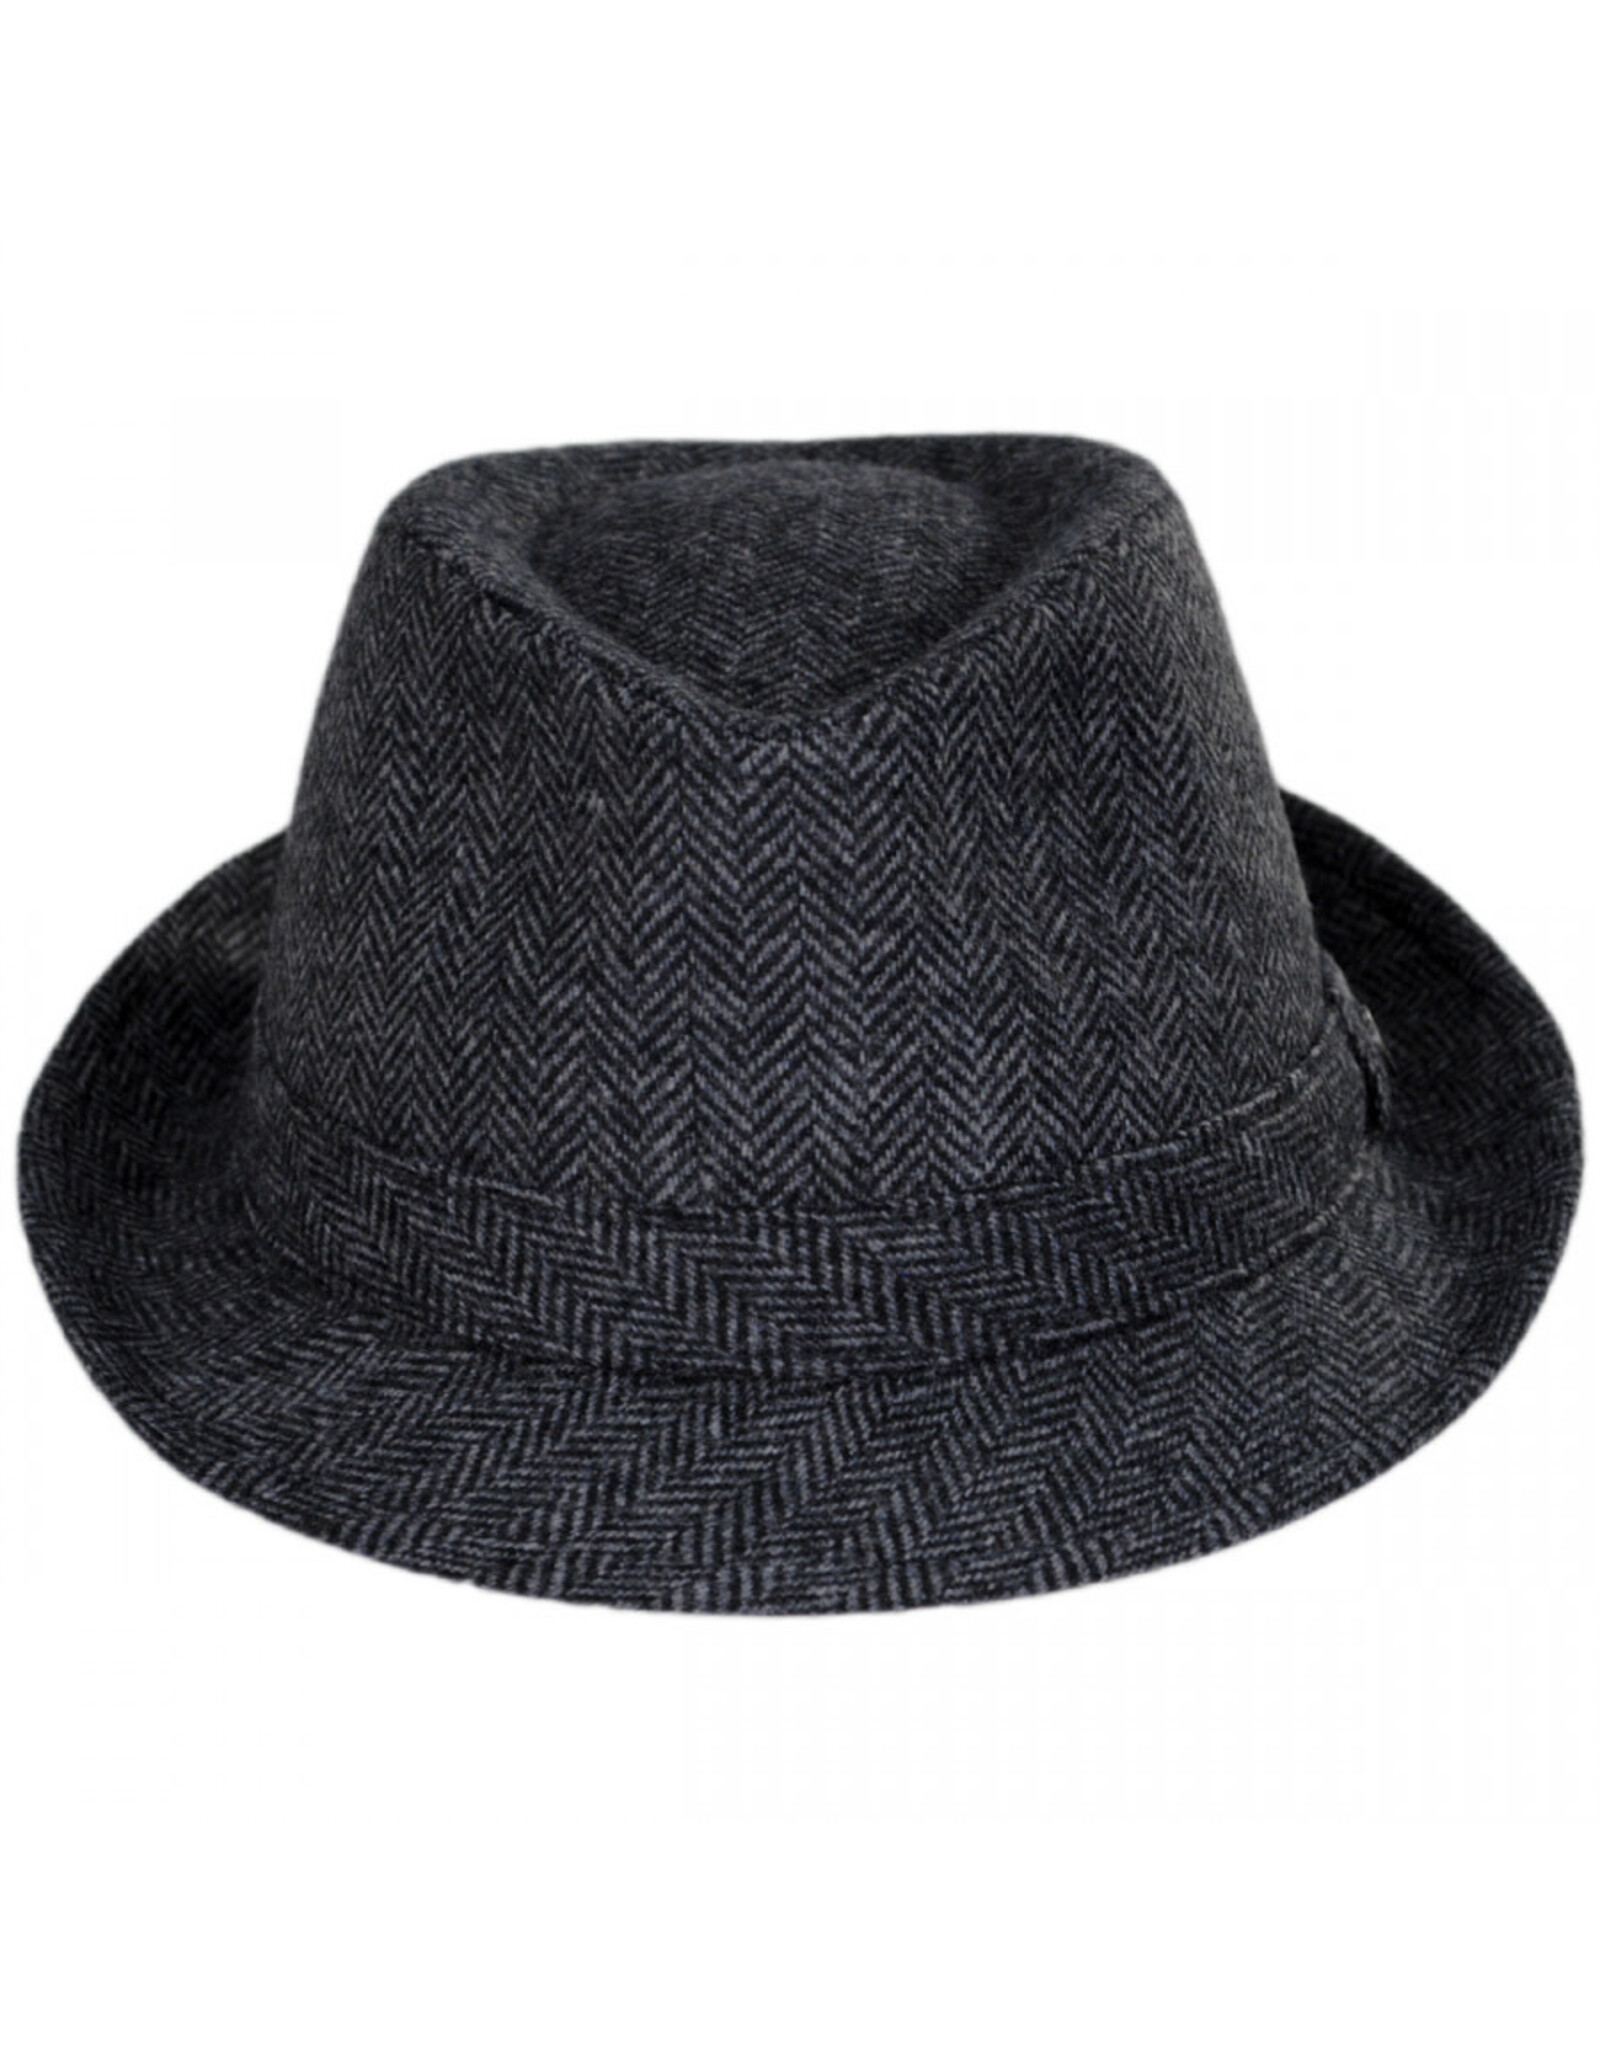 Jaxon Hats, Inc. Lg Herringbone Wool Trilby Fedora Hat